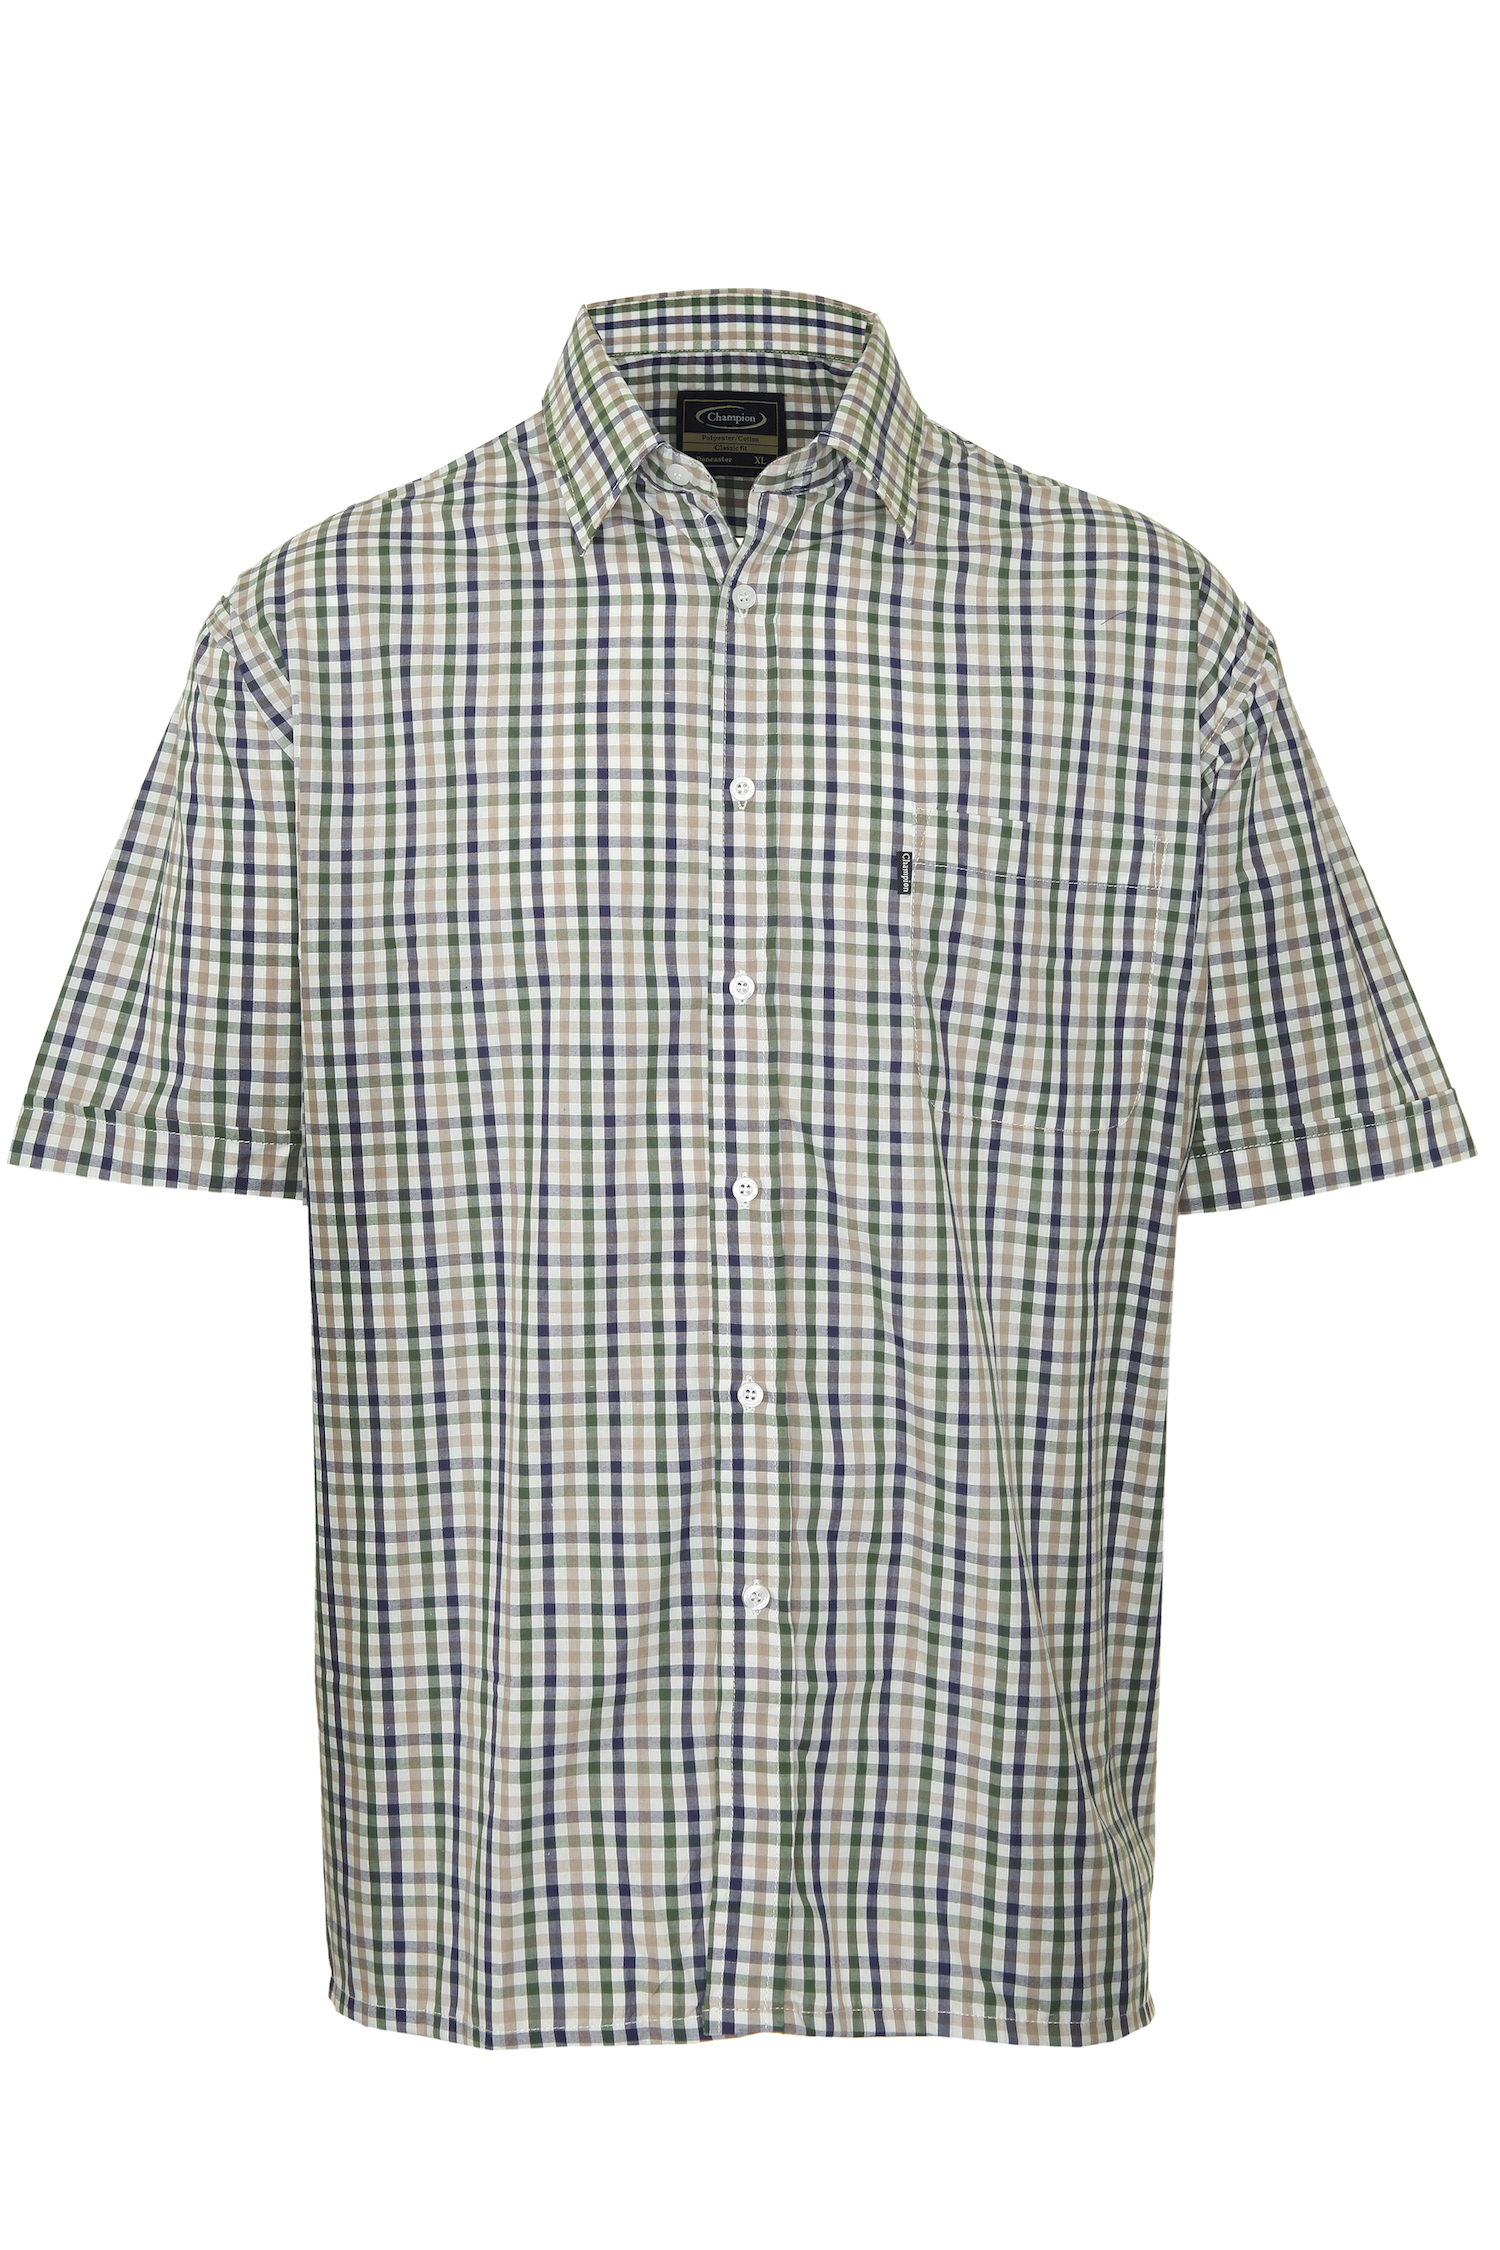 Champion Men's Doncaster Short Sleeve Shirt - Green - Edinburgh Outdoor ...